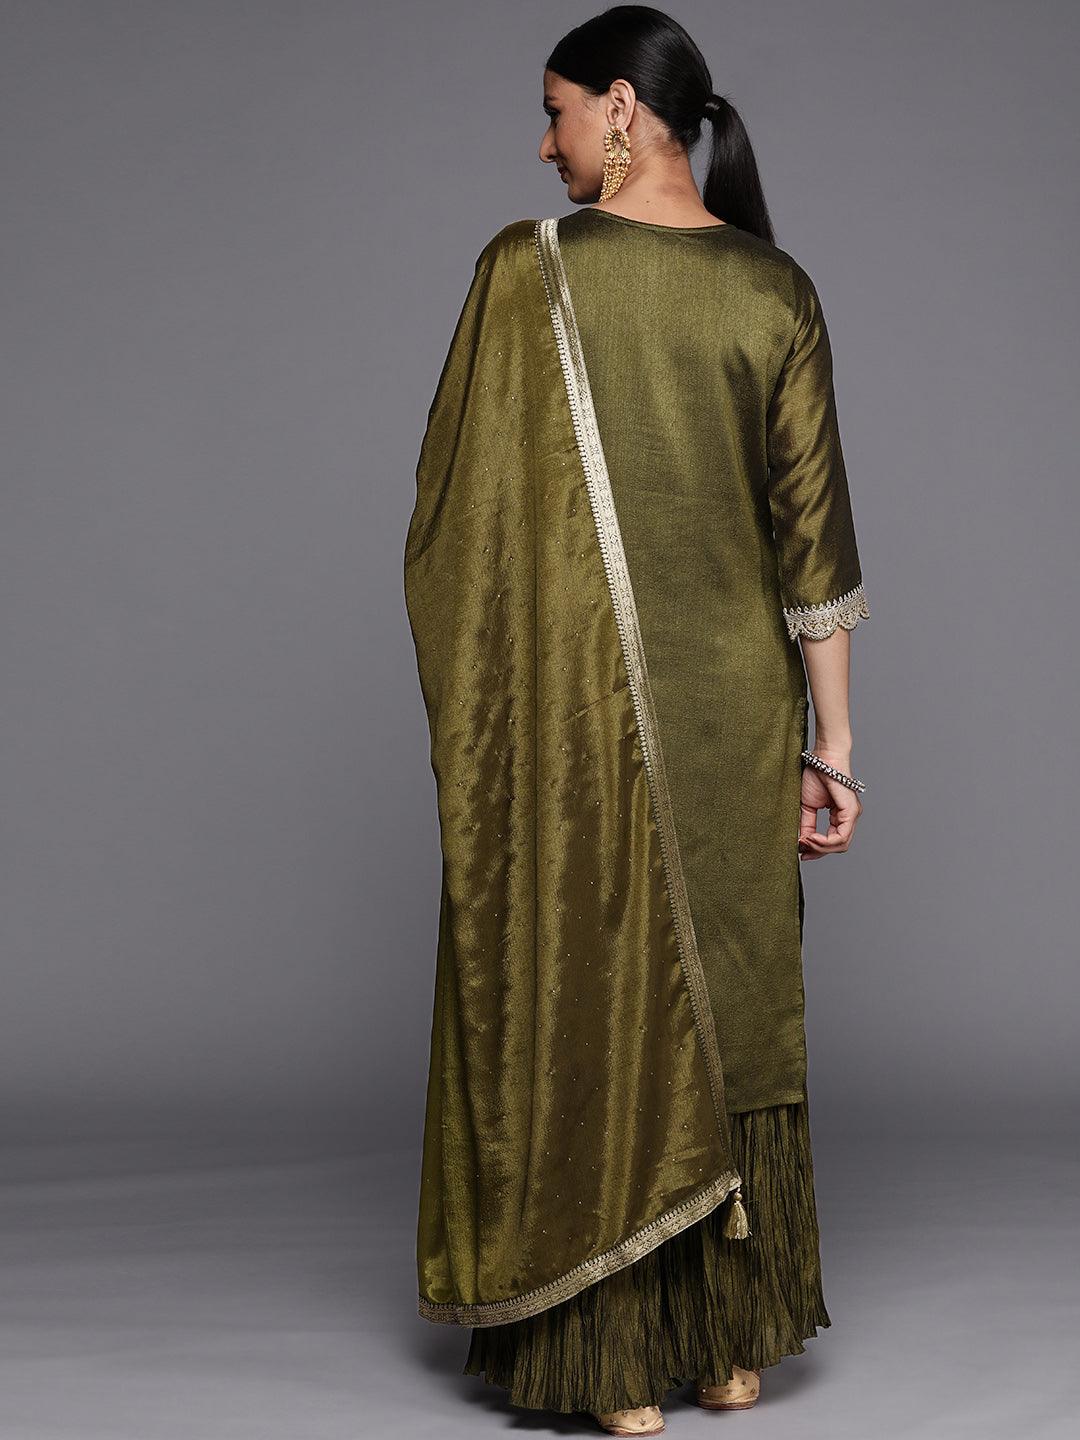 Olive Yoke Design Silk Blend Straight Sharara Suit Set With Dupatta